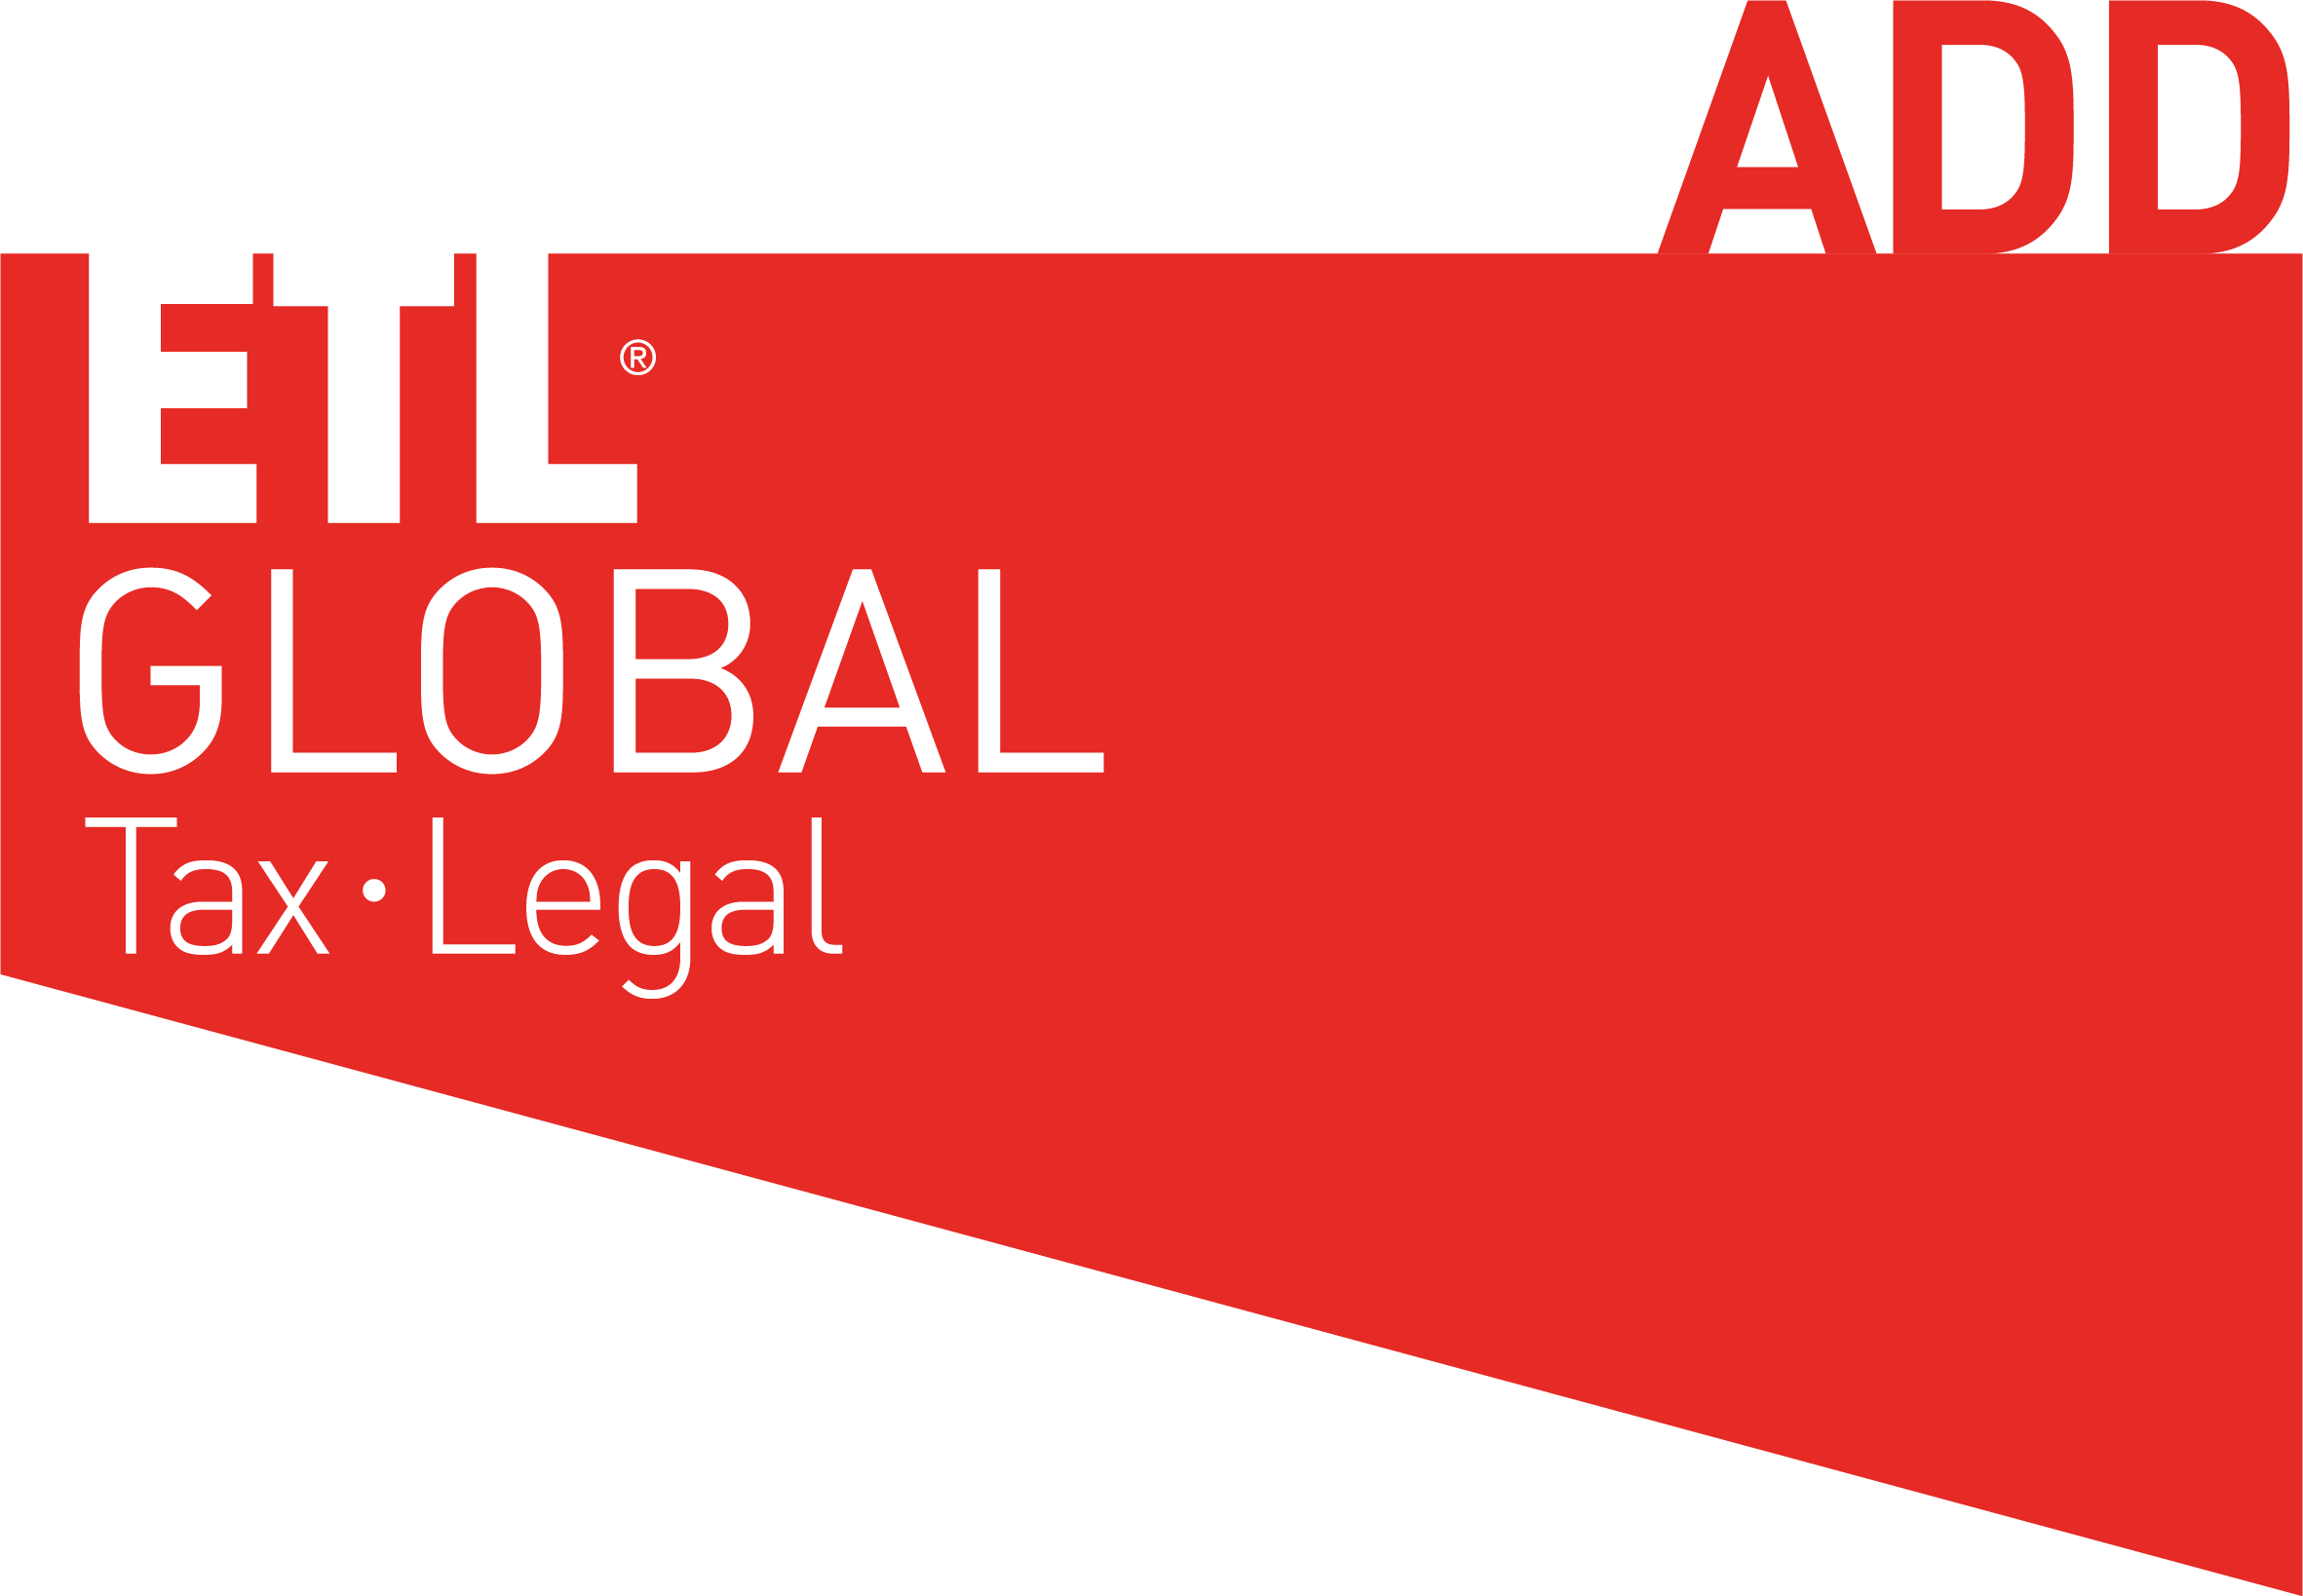 Pierre Lawyers integrated in ADD ETL GLOBAL TAX LEGAL